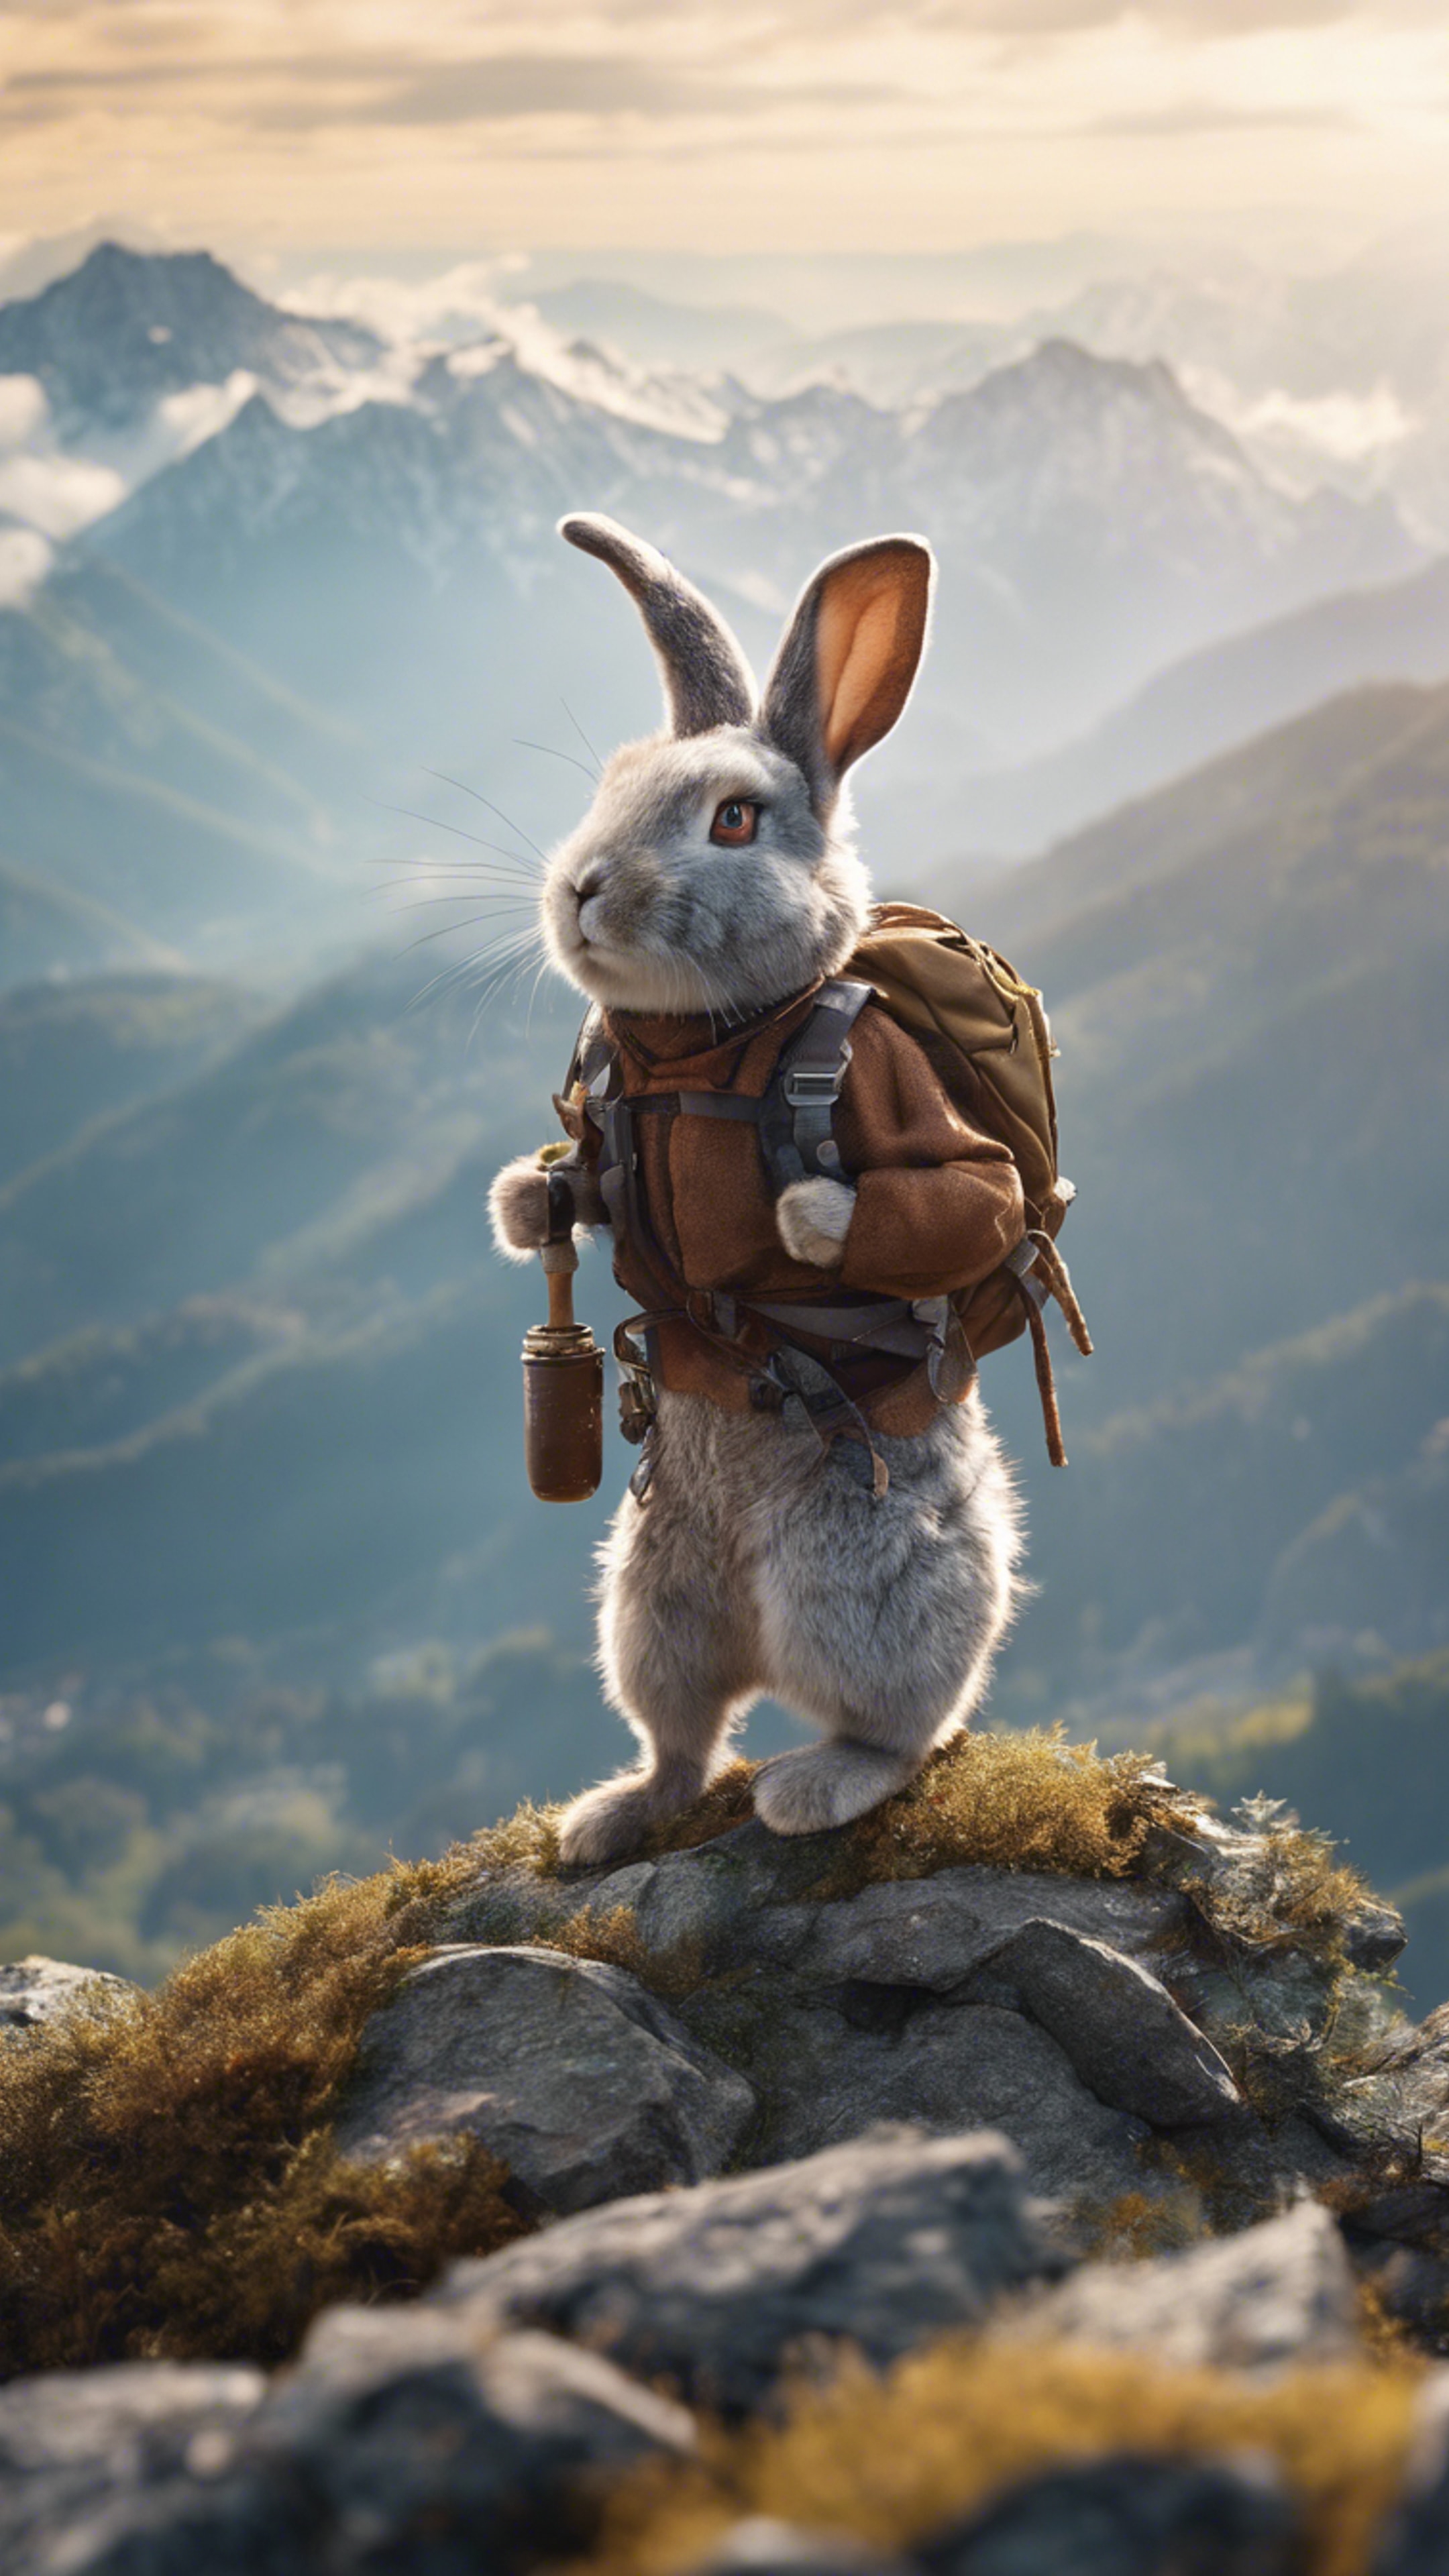 A Rabbit mountaineer conquering a treacherous peak. Tapeta na zeď[faadaab6eec04e17a877]